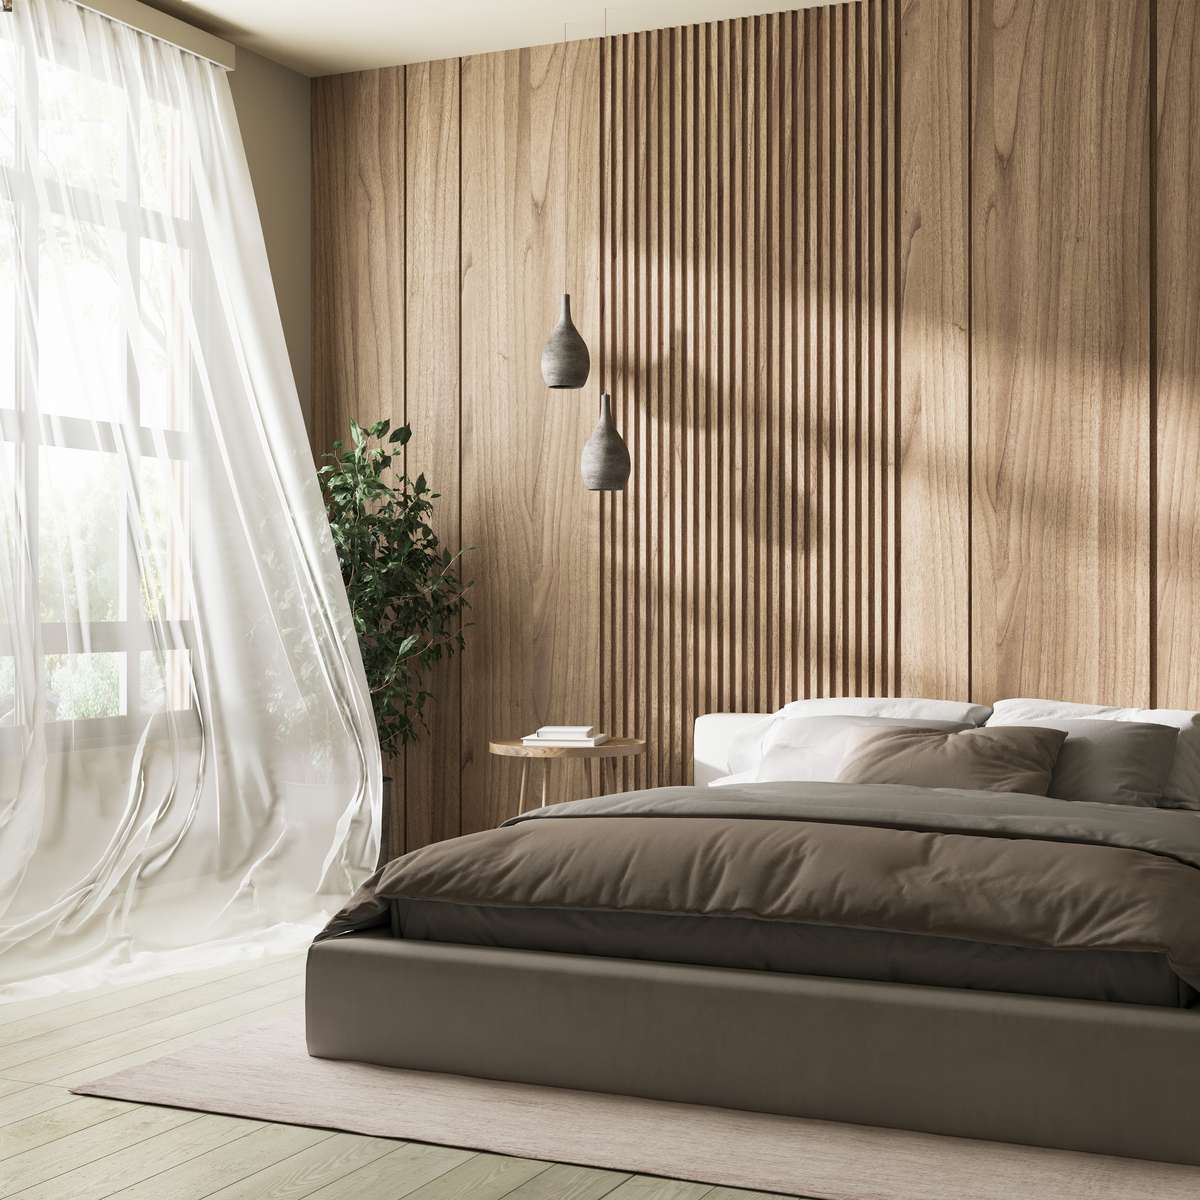 bedroom-interior-with-wooden-panel-wall-bed-near-2022-06-02-23-20-48-utc__1_.jpg